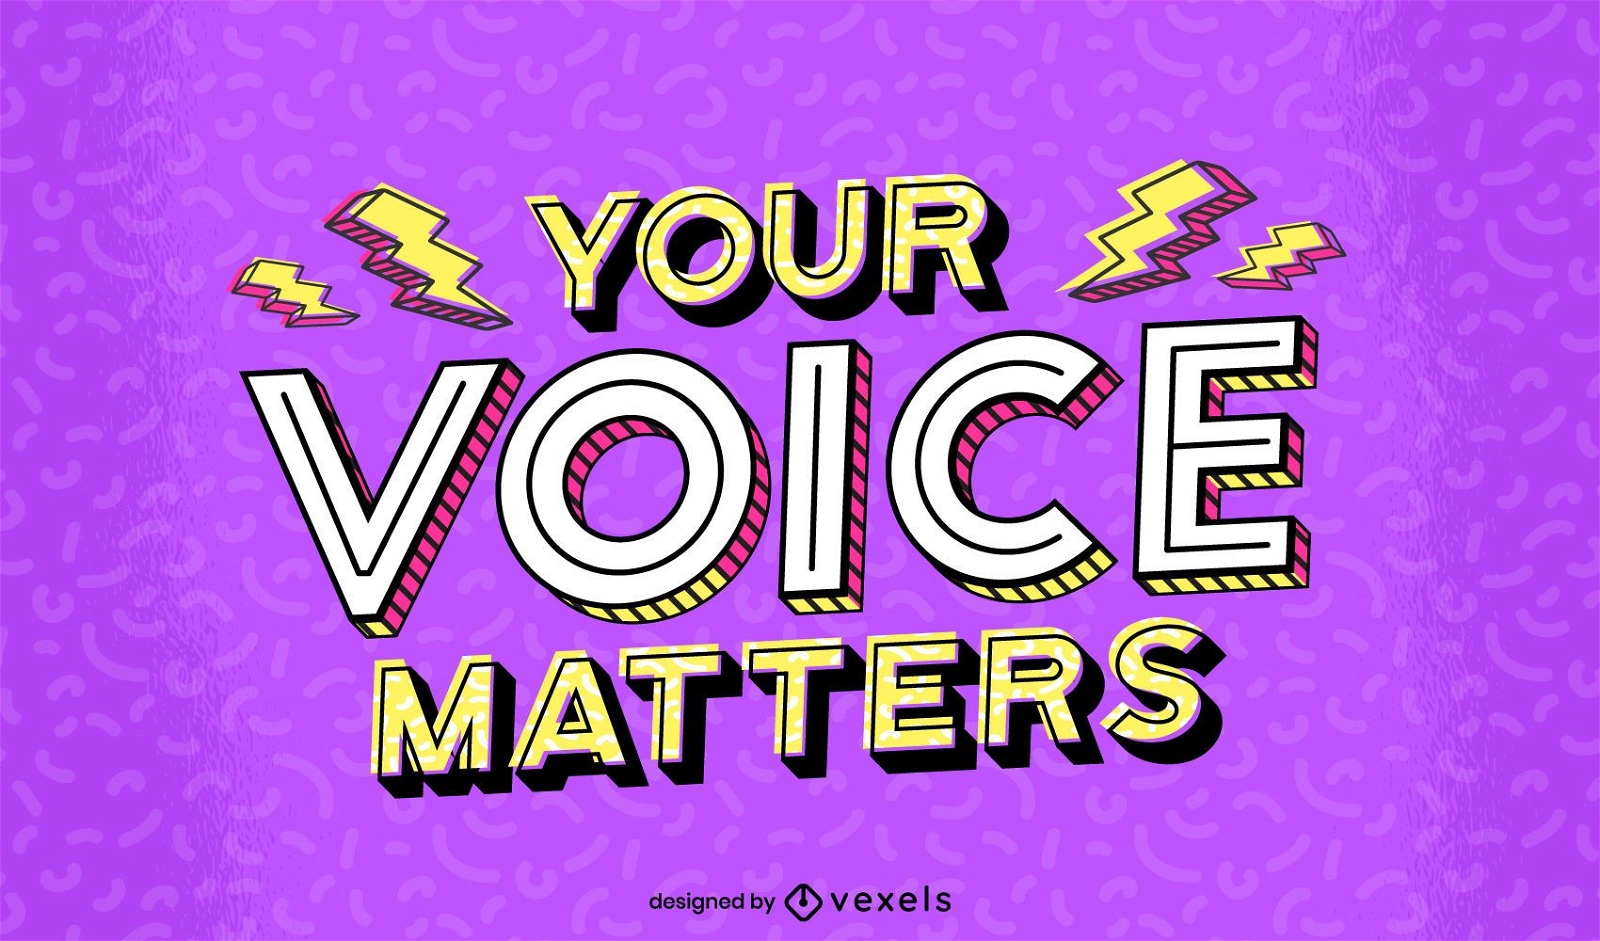 Your voice matters lettering design